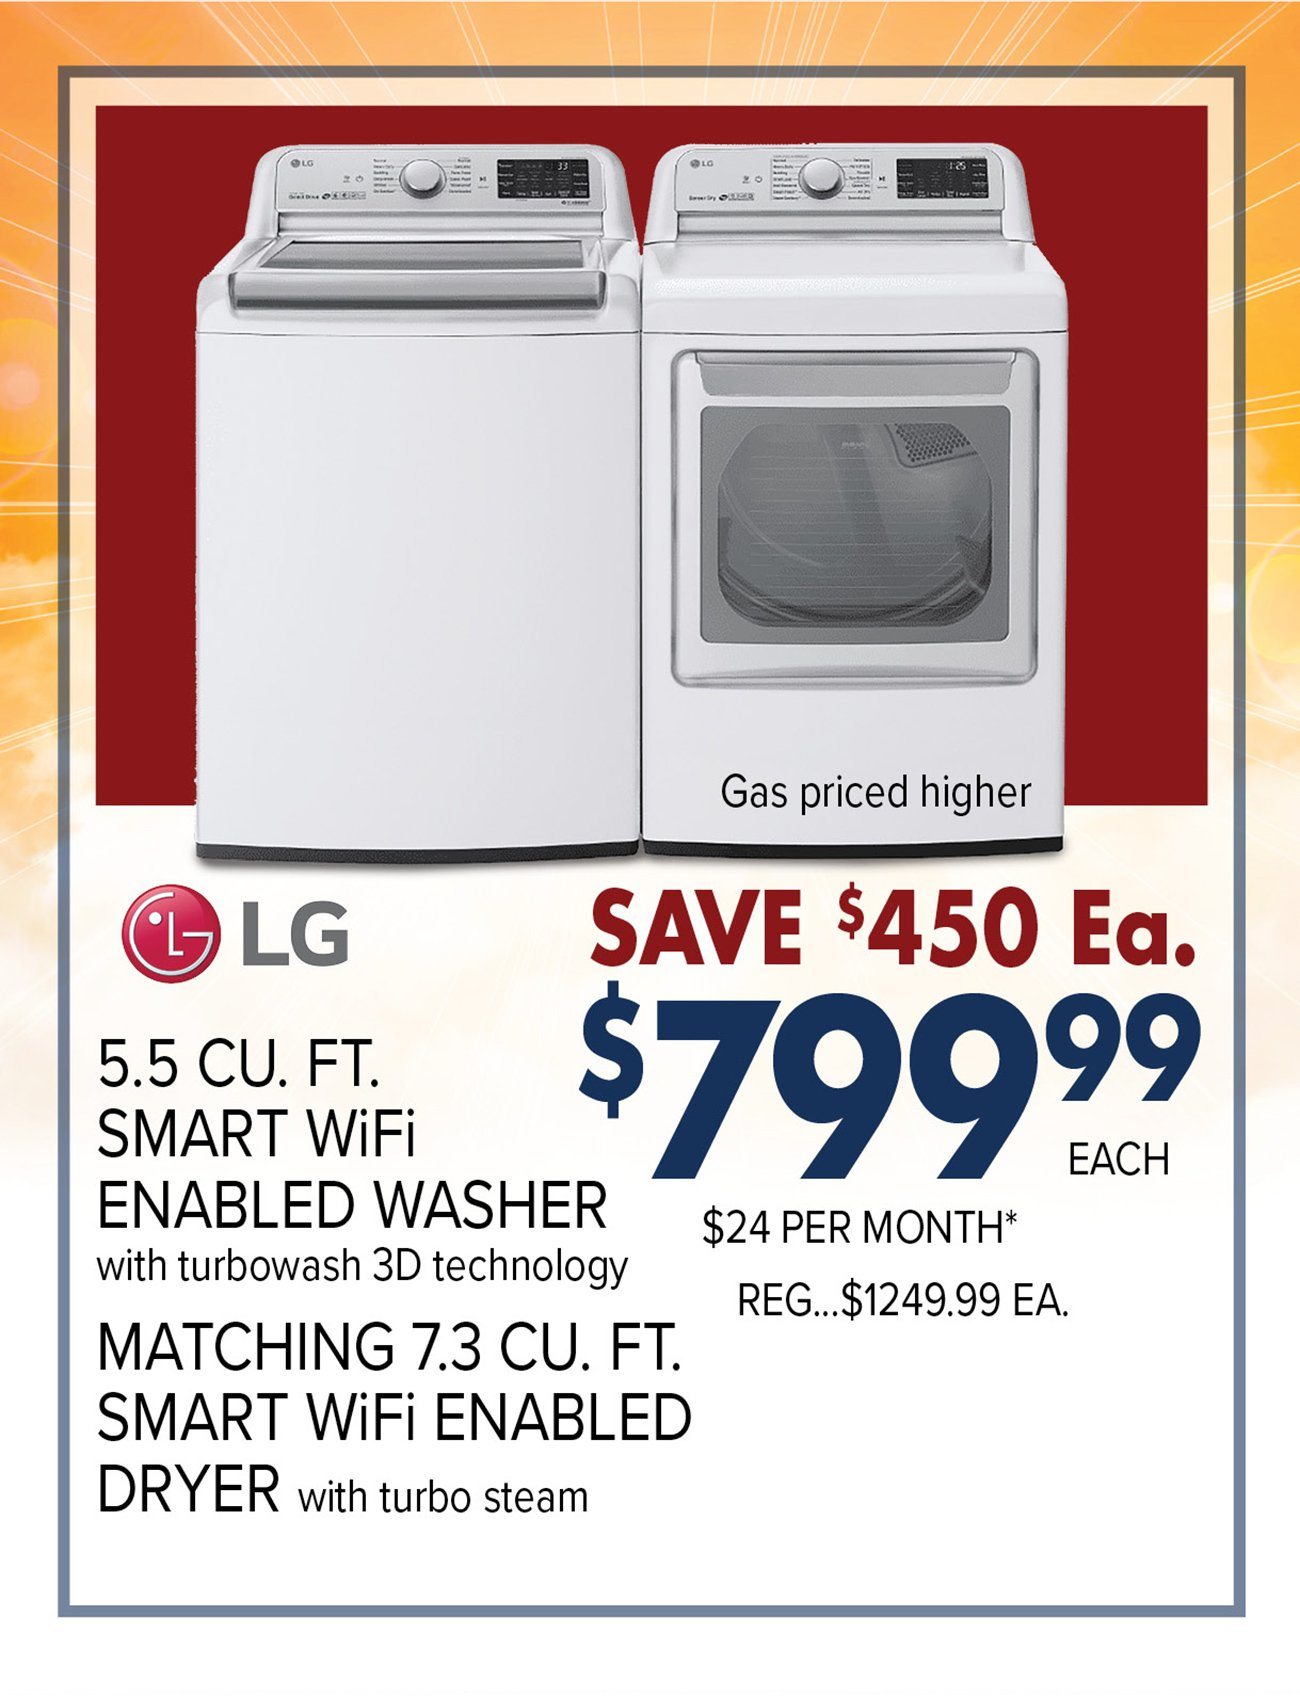 LG-Washer-dryer